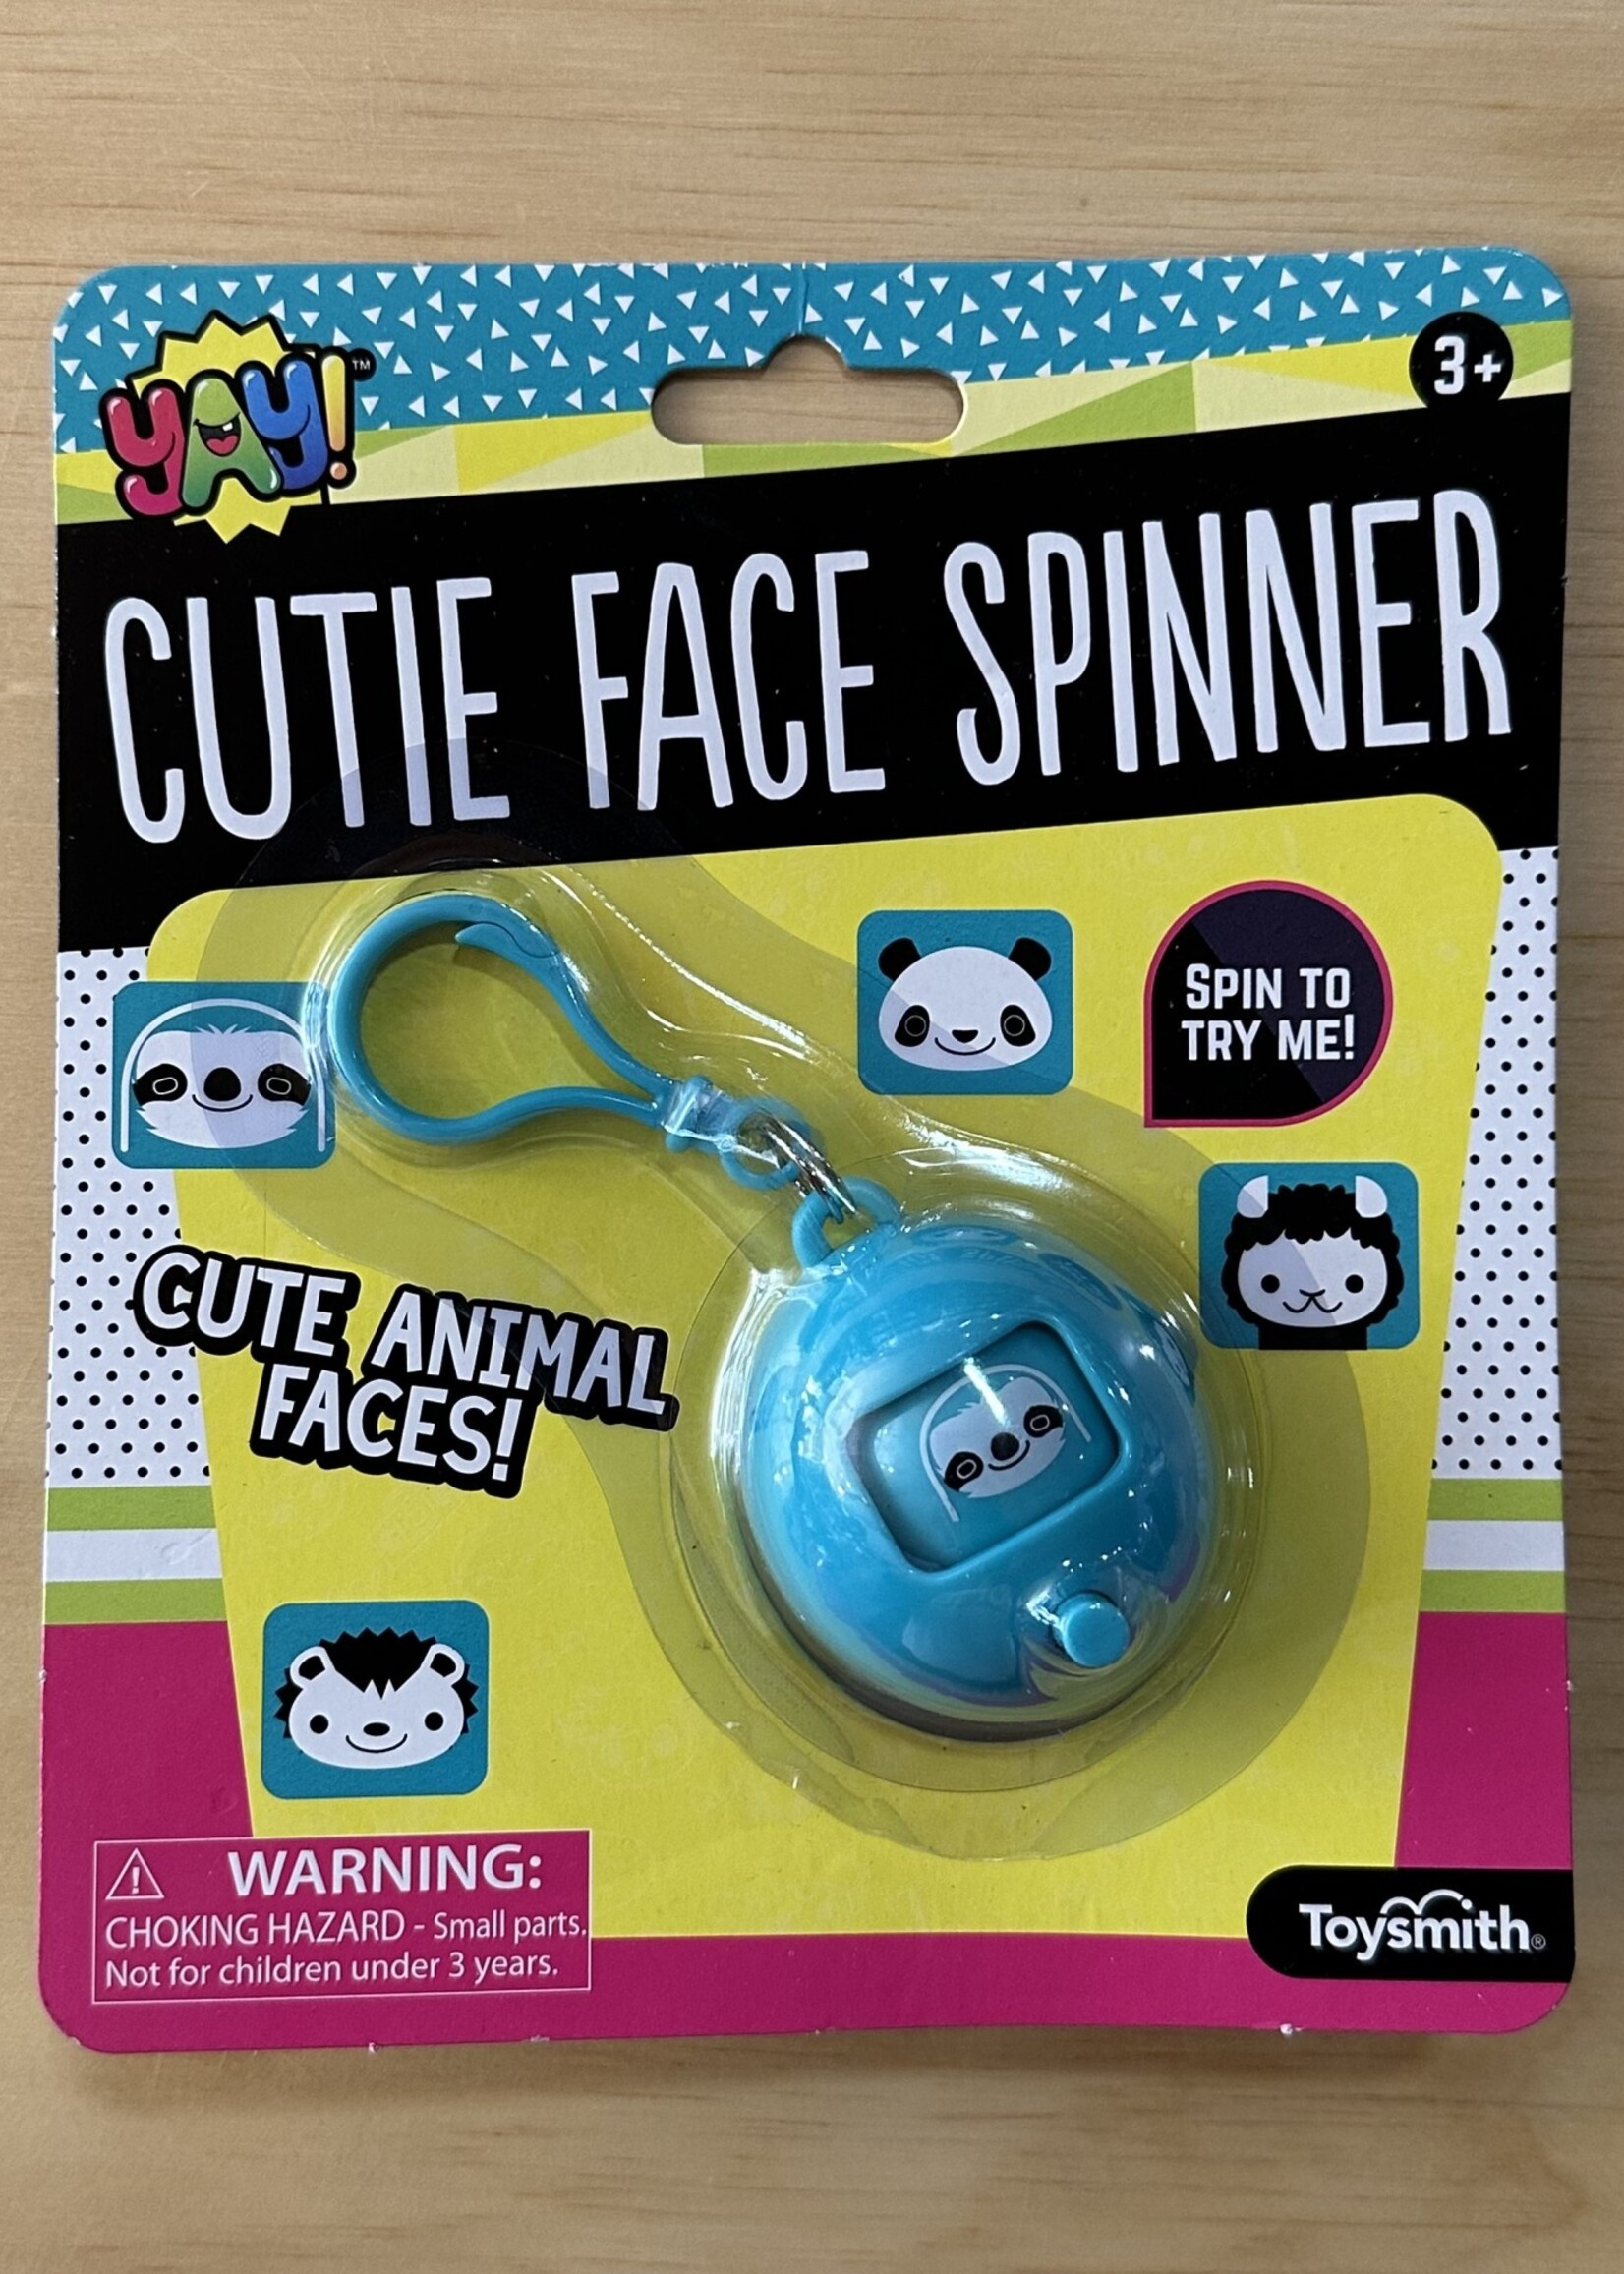 Toysmith Cutie Face Spinner